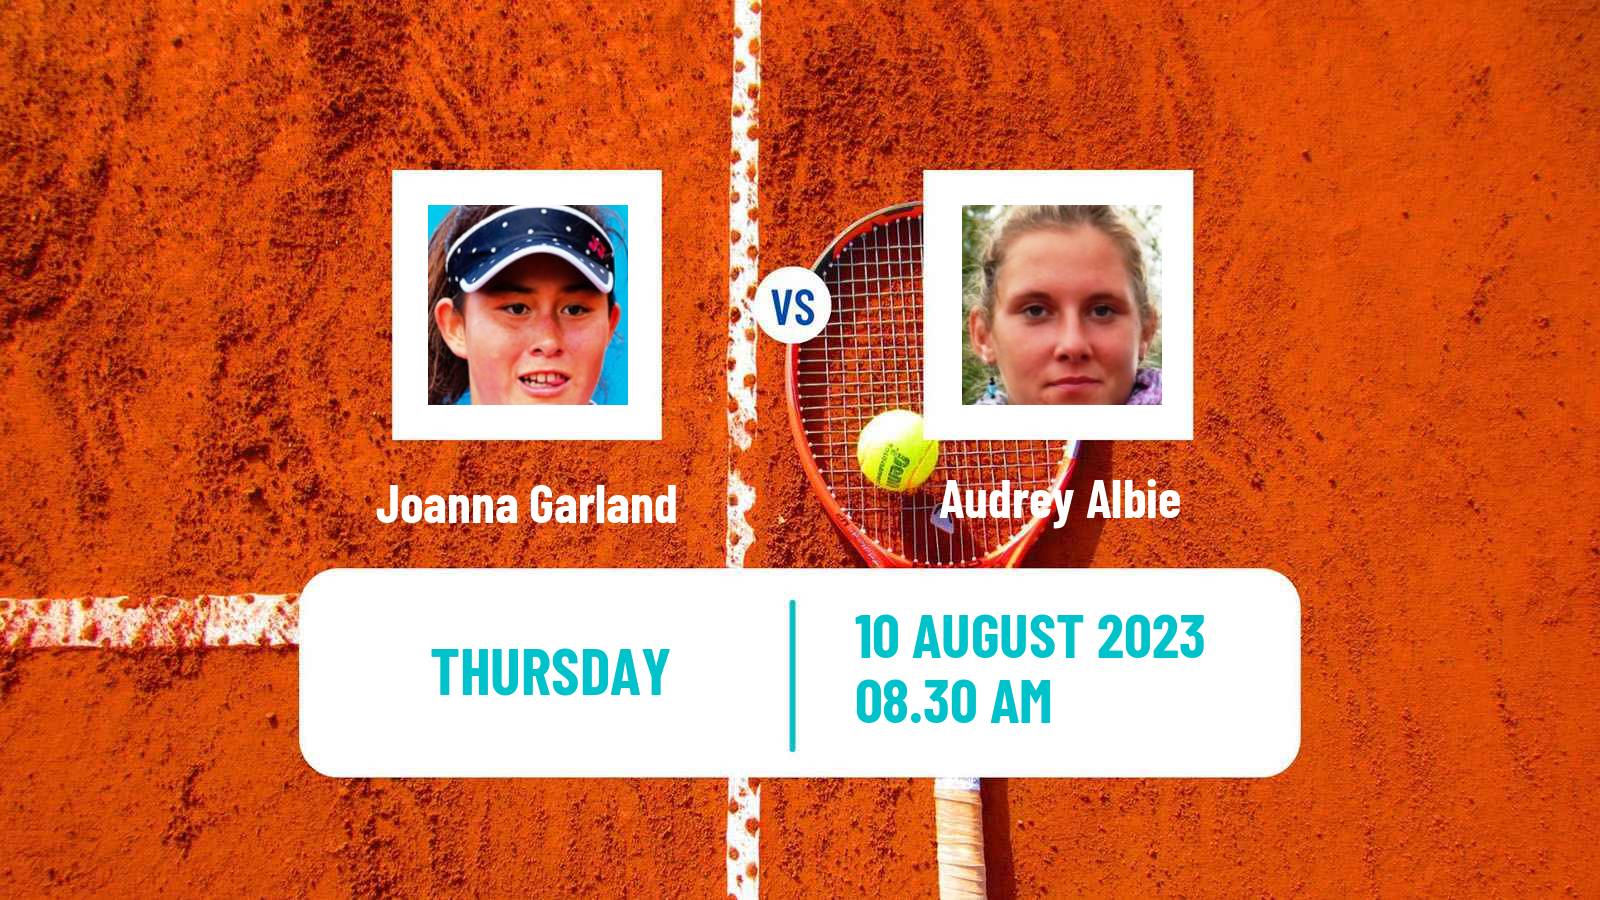 Tennis ITF W25 Roehampton 3 Women Joanna Garland - Audrey Albie